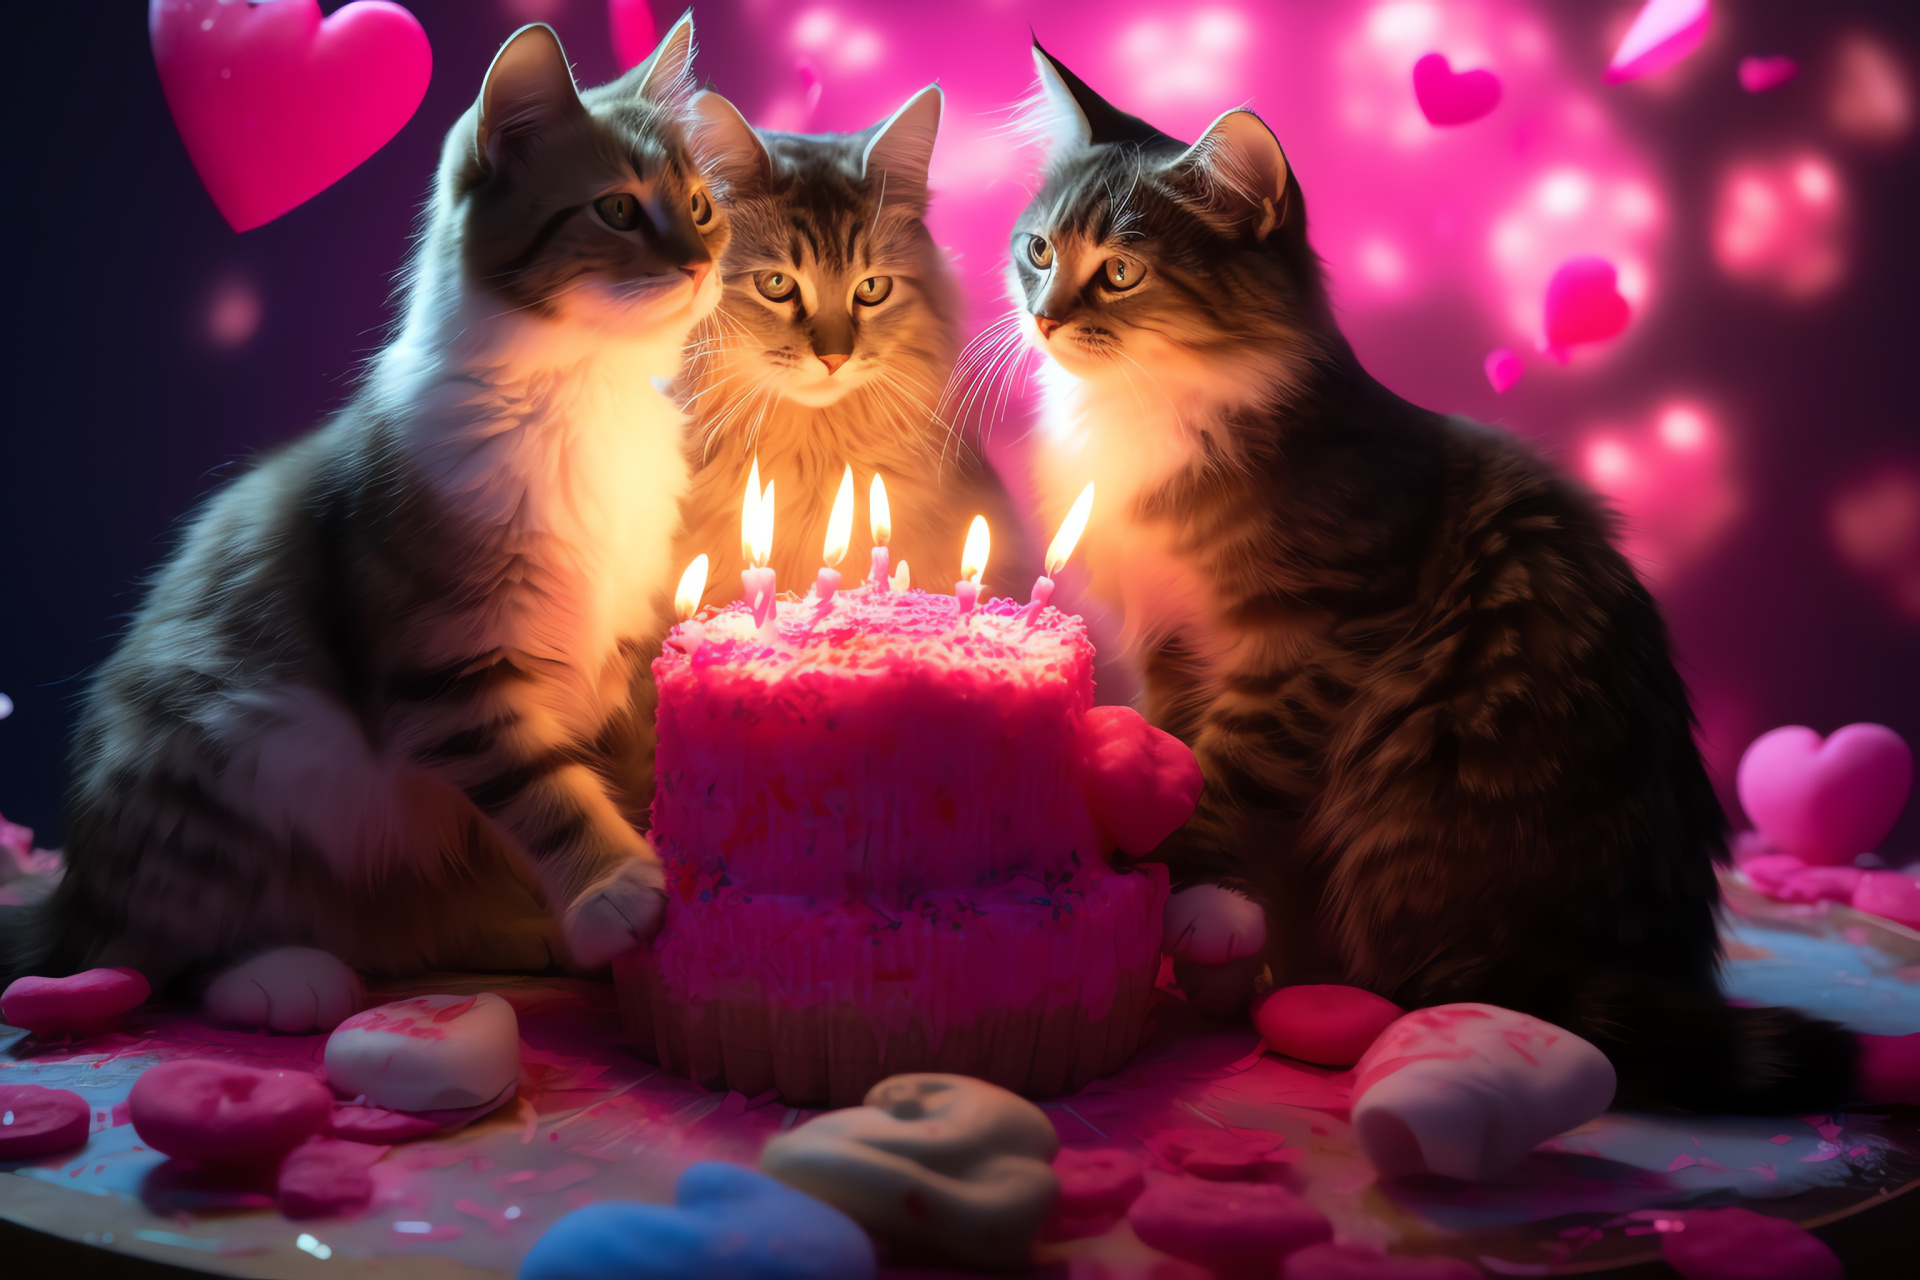 Celebratory felines, Heart-shaped dessert, Cerise icing, Sugary heart embellishments, HD Desktop Image